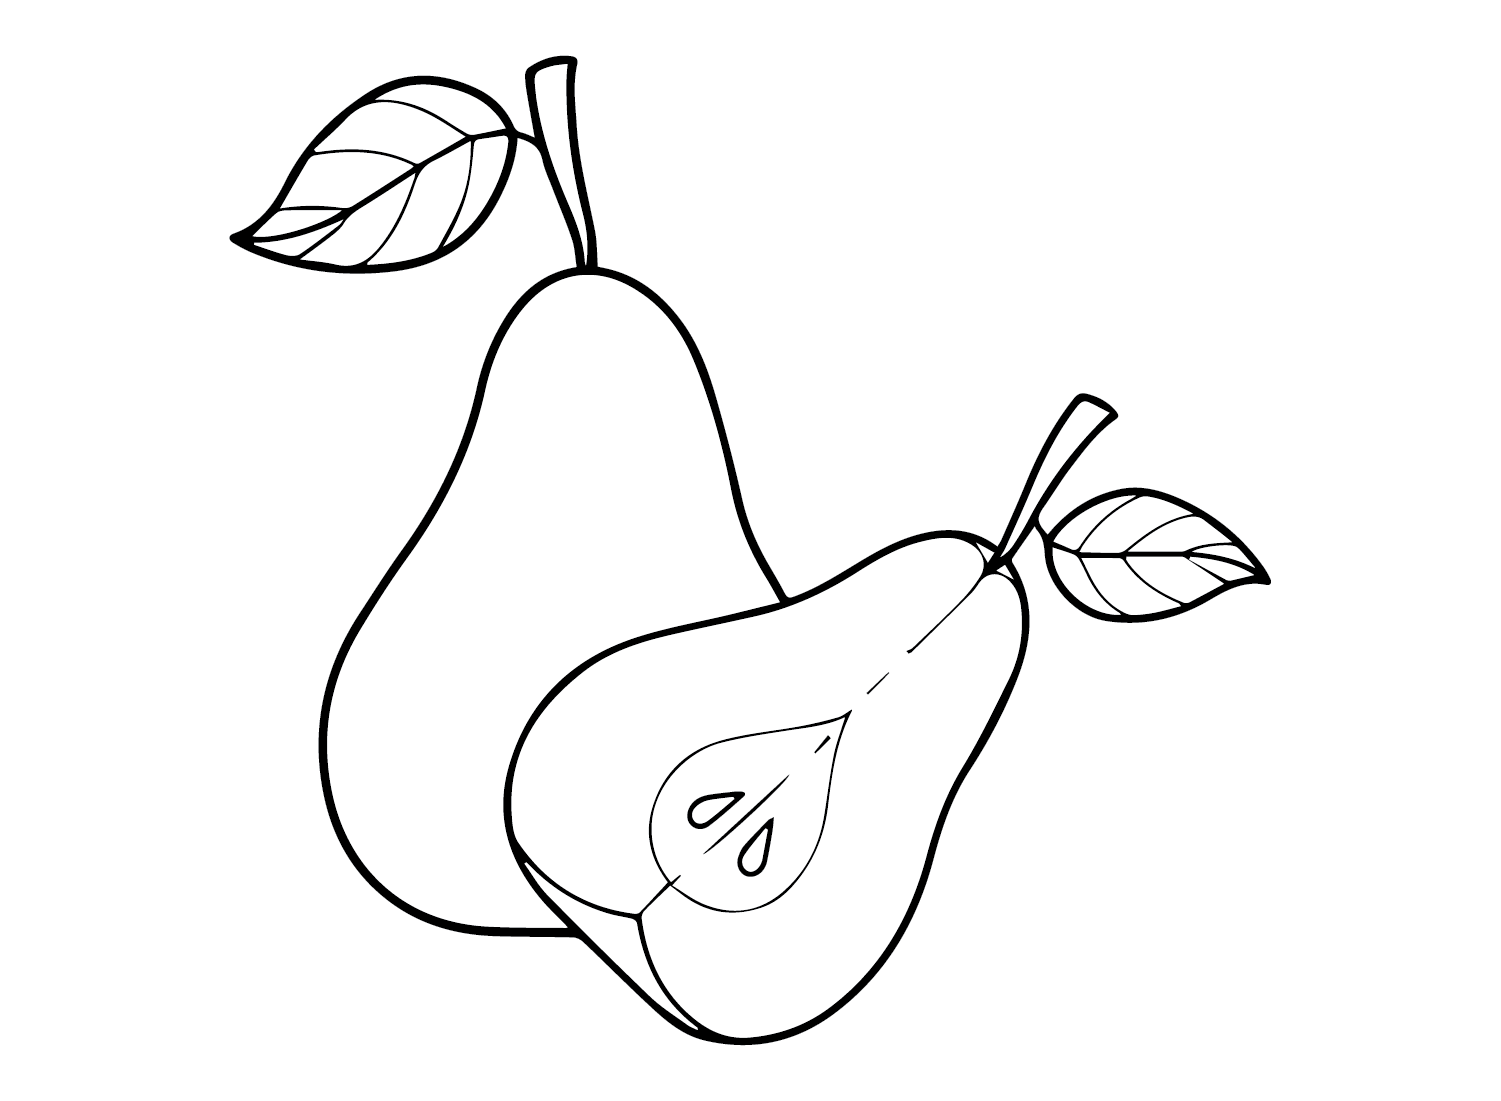 Pears 的儿童梨